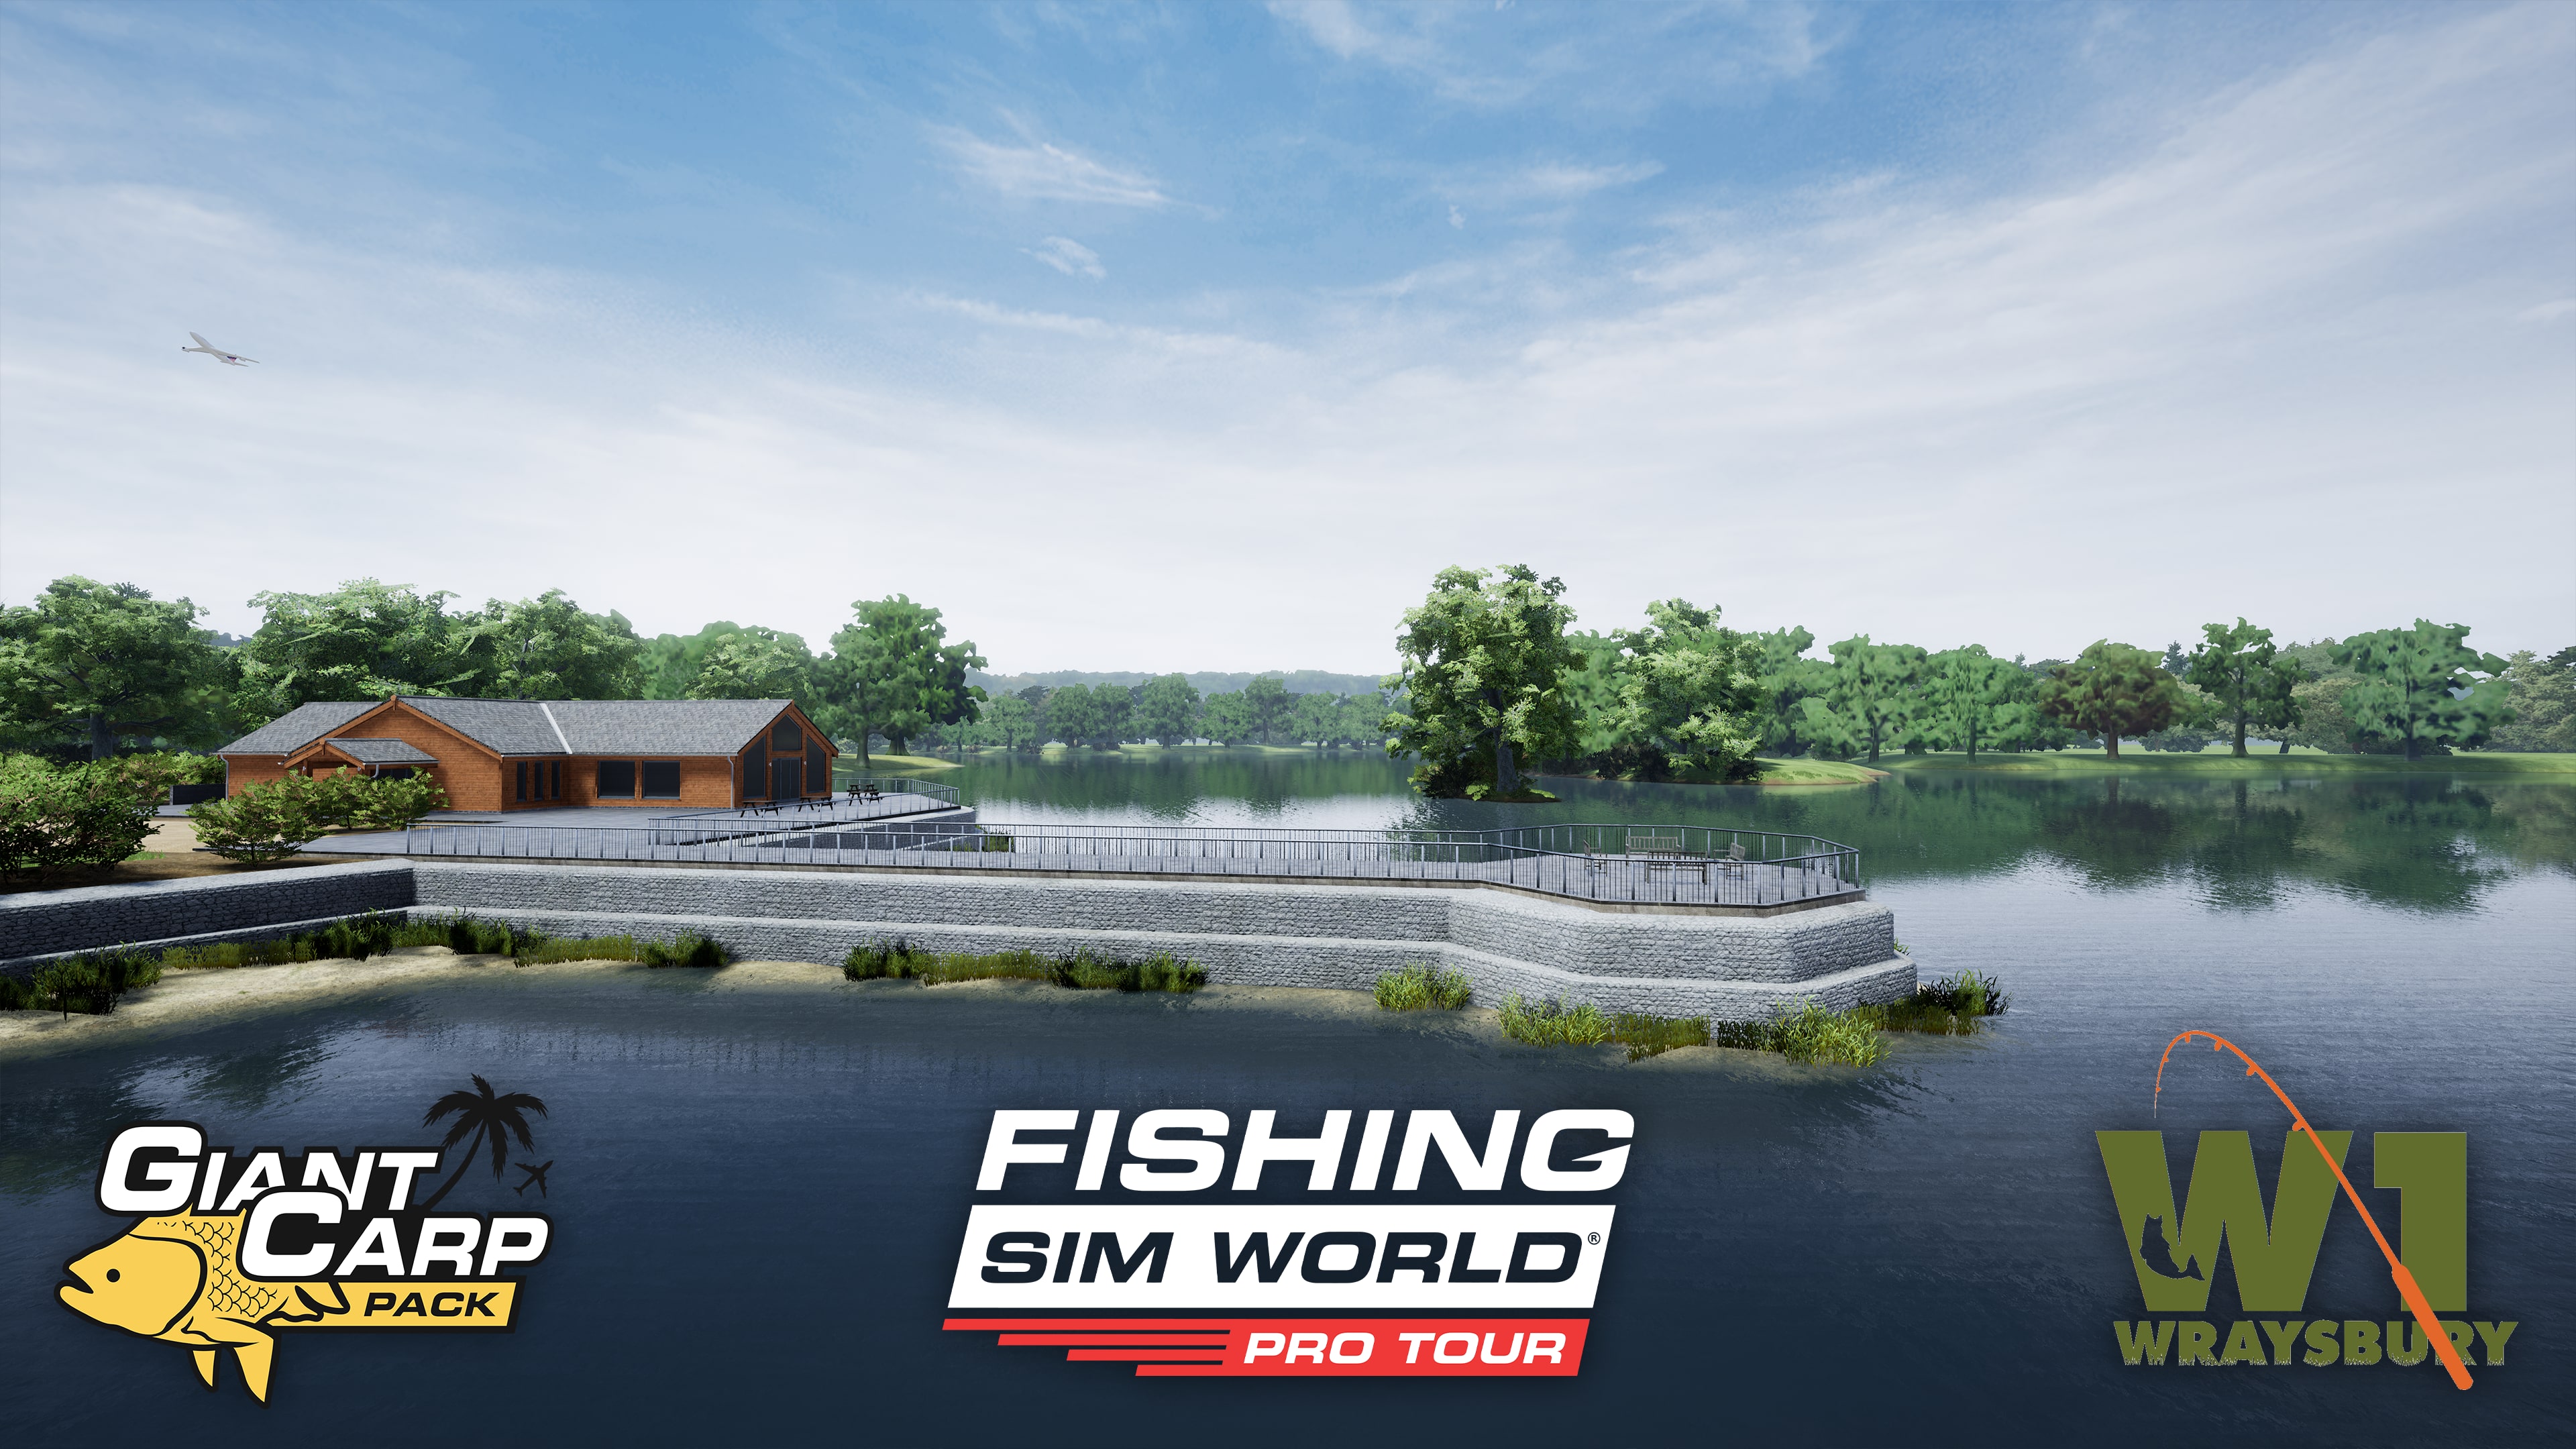 Fishing Sim World: Pro Tour - Wraysbury 1 South Lake